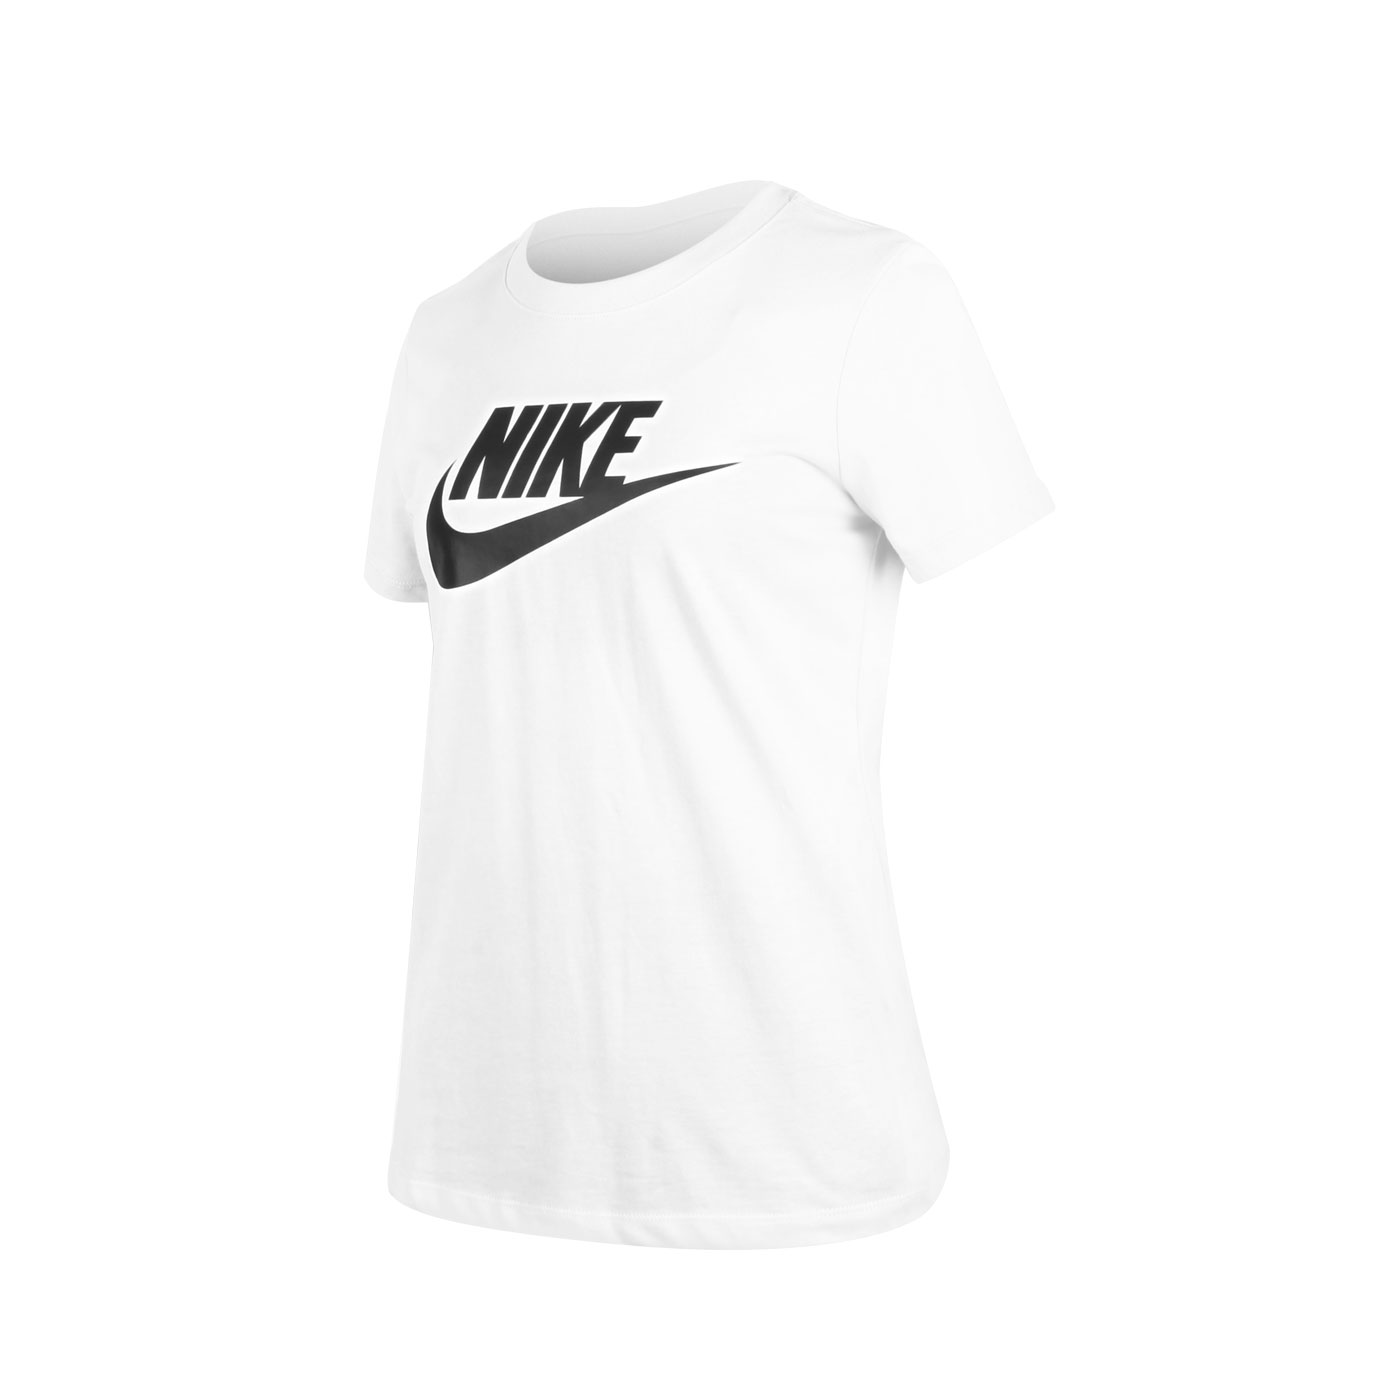 NIKE 女款短袖T恤 BV6170010 - 白黑